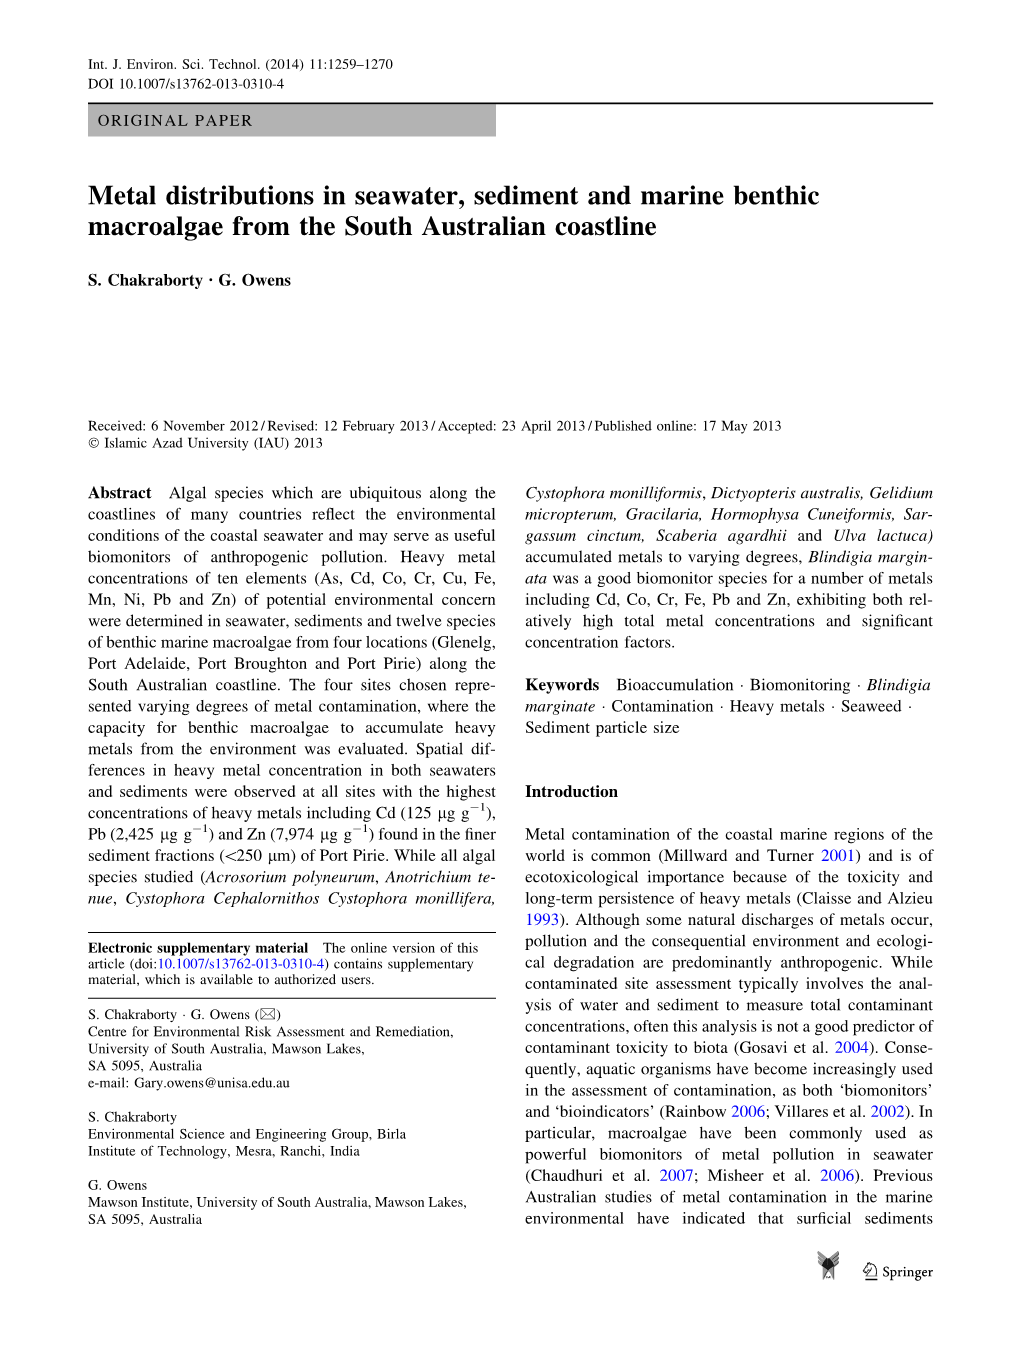 Metal Distributions in Seawater, Sediment and Marine Benthic Macroalgae from the South Australian Coastline